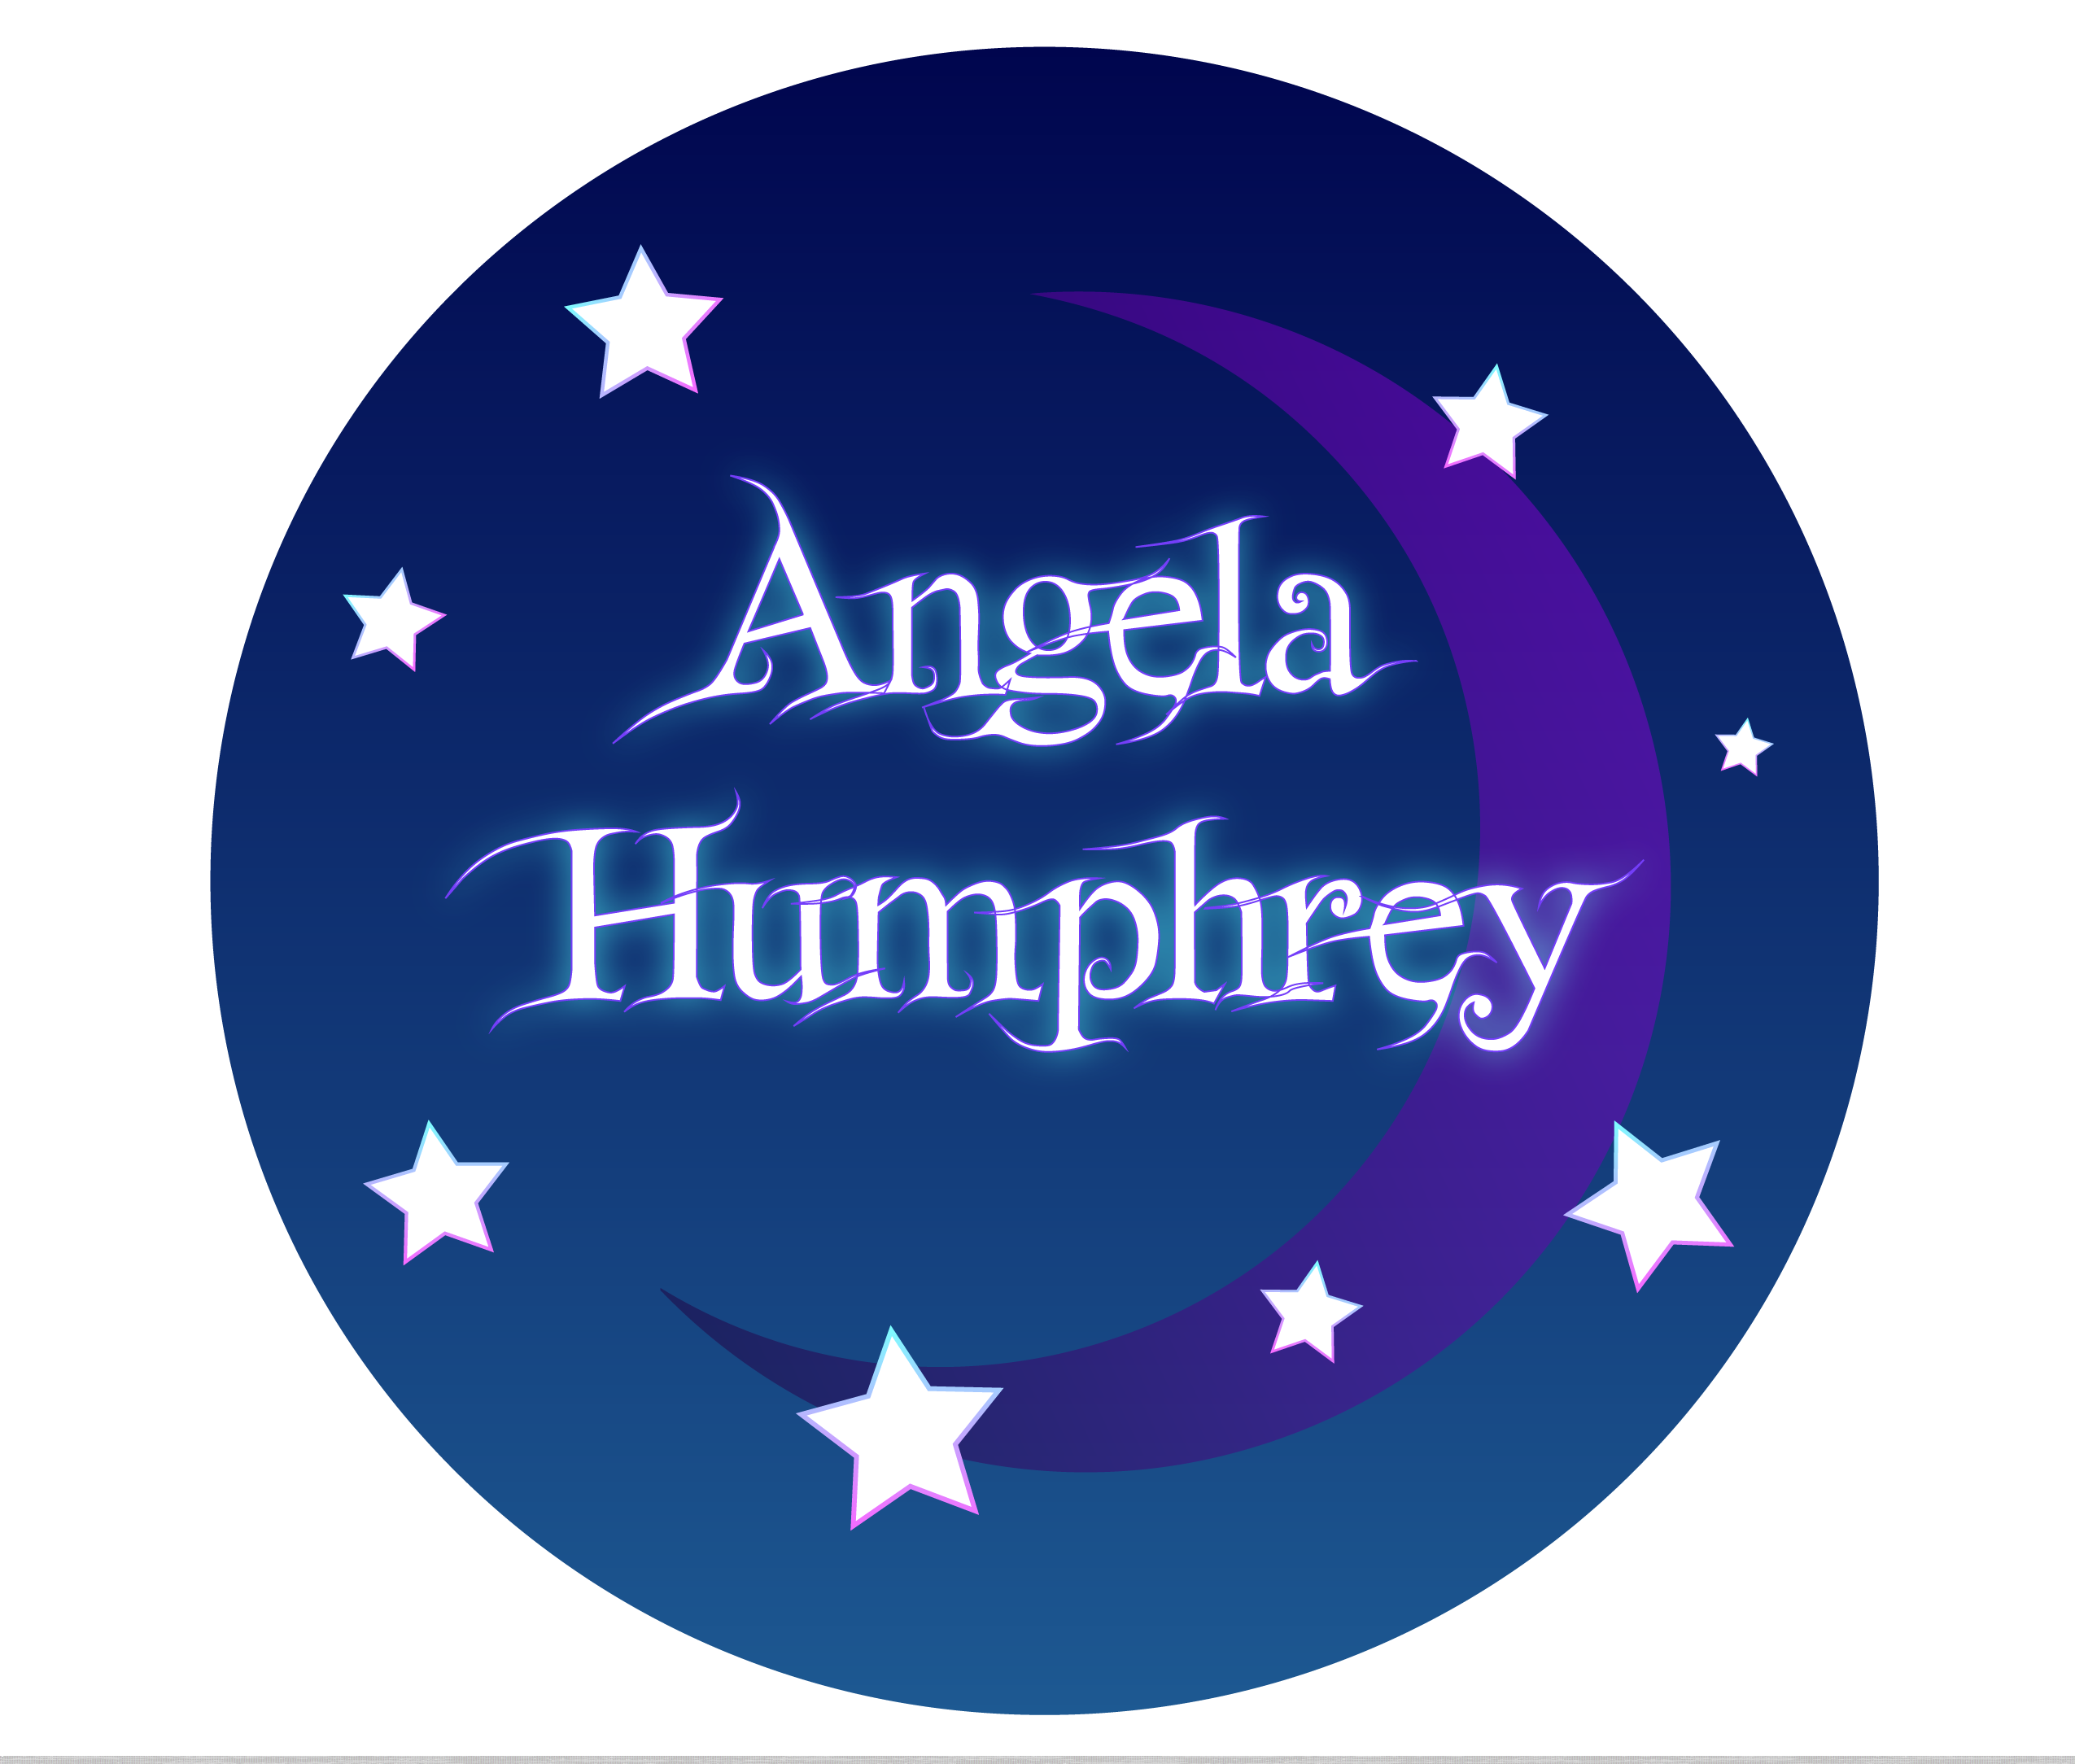 Angela Humphrey